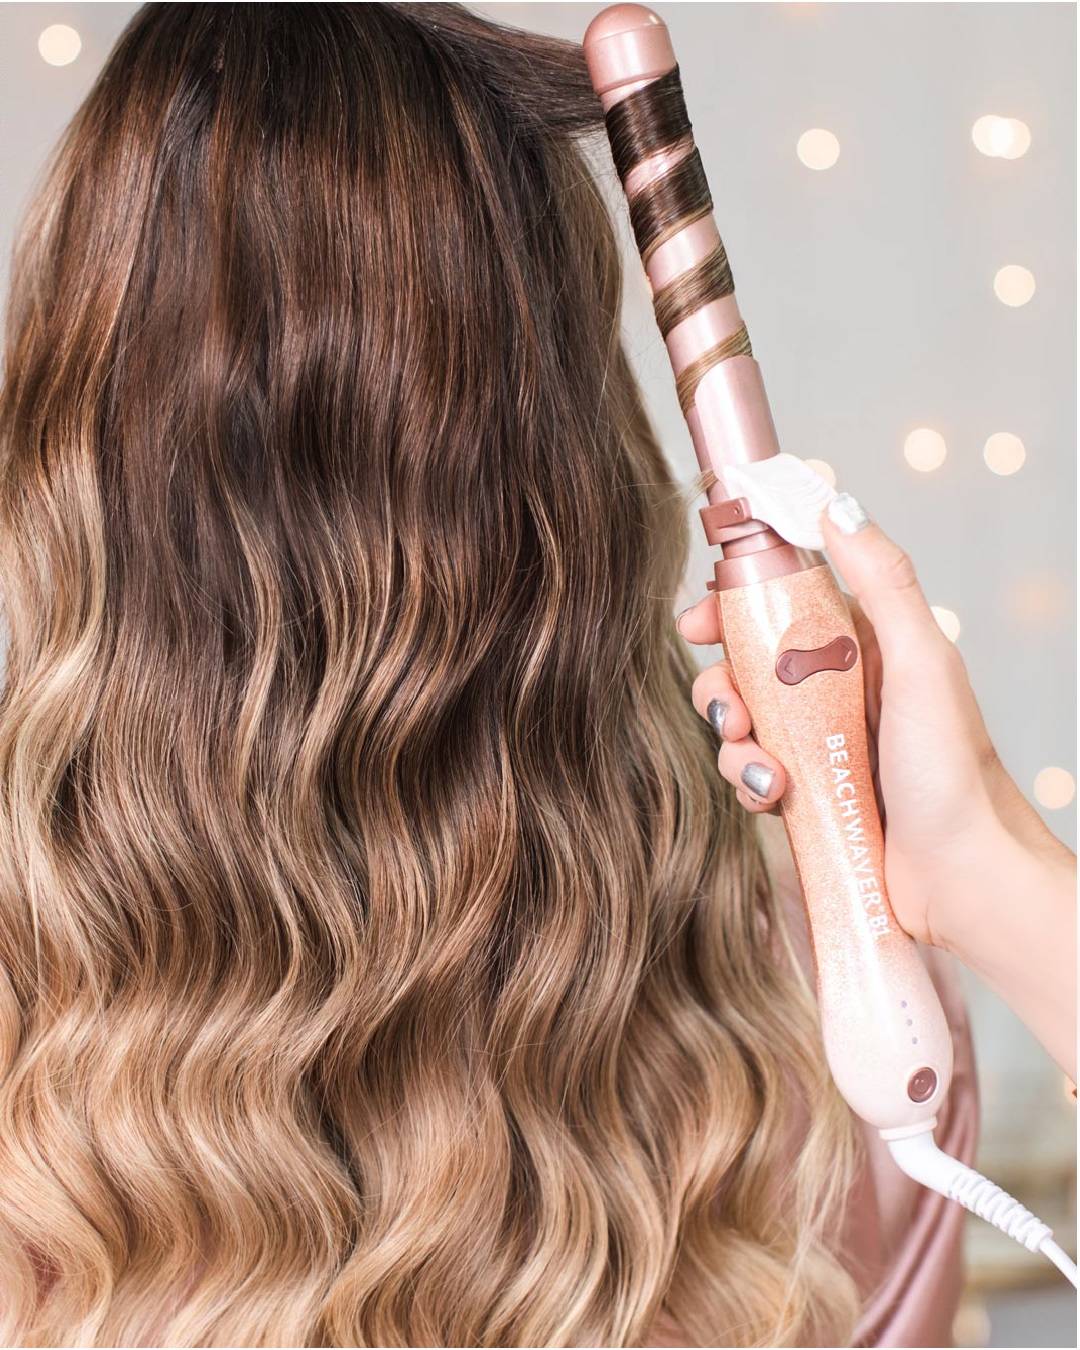 Image of pink b1 Beachwaver hair curler curlinhg a brunette with highlights hair.